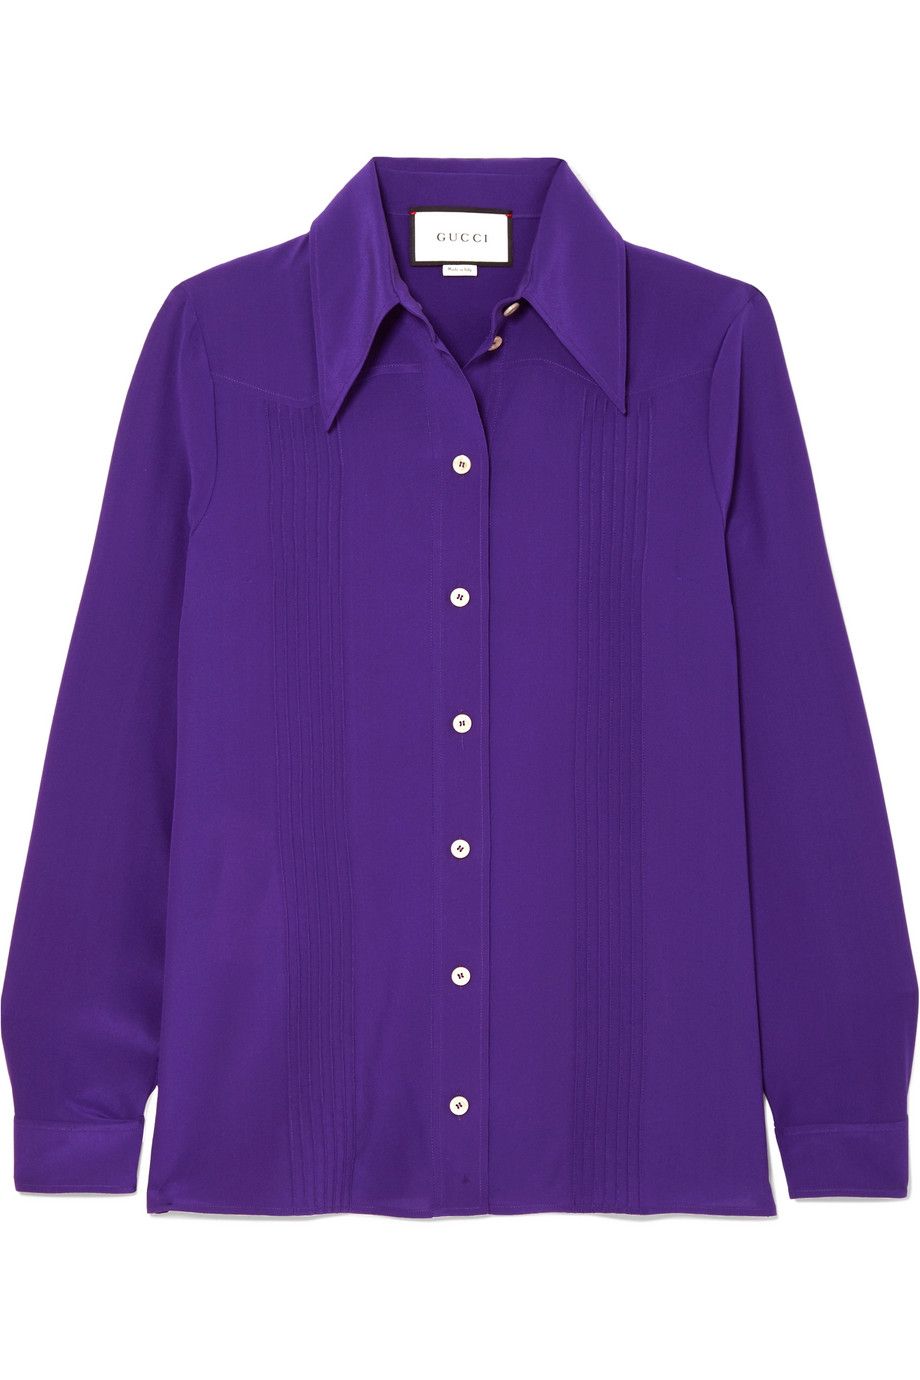 Clothing, Violet, Purple, Sleeve, Collar, Button, Outerwear, Shirt, Dress shirt, Magenta, 